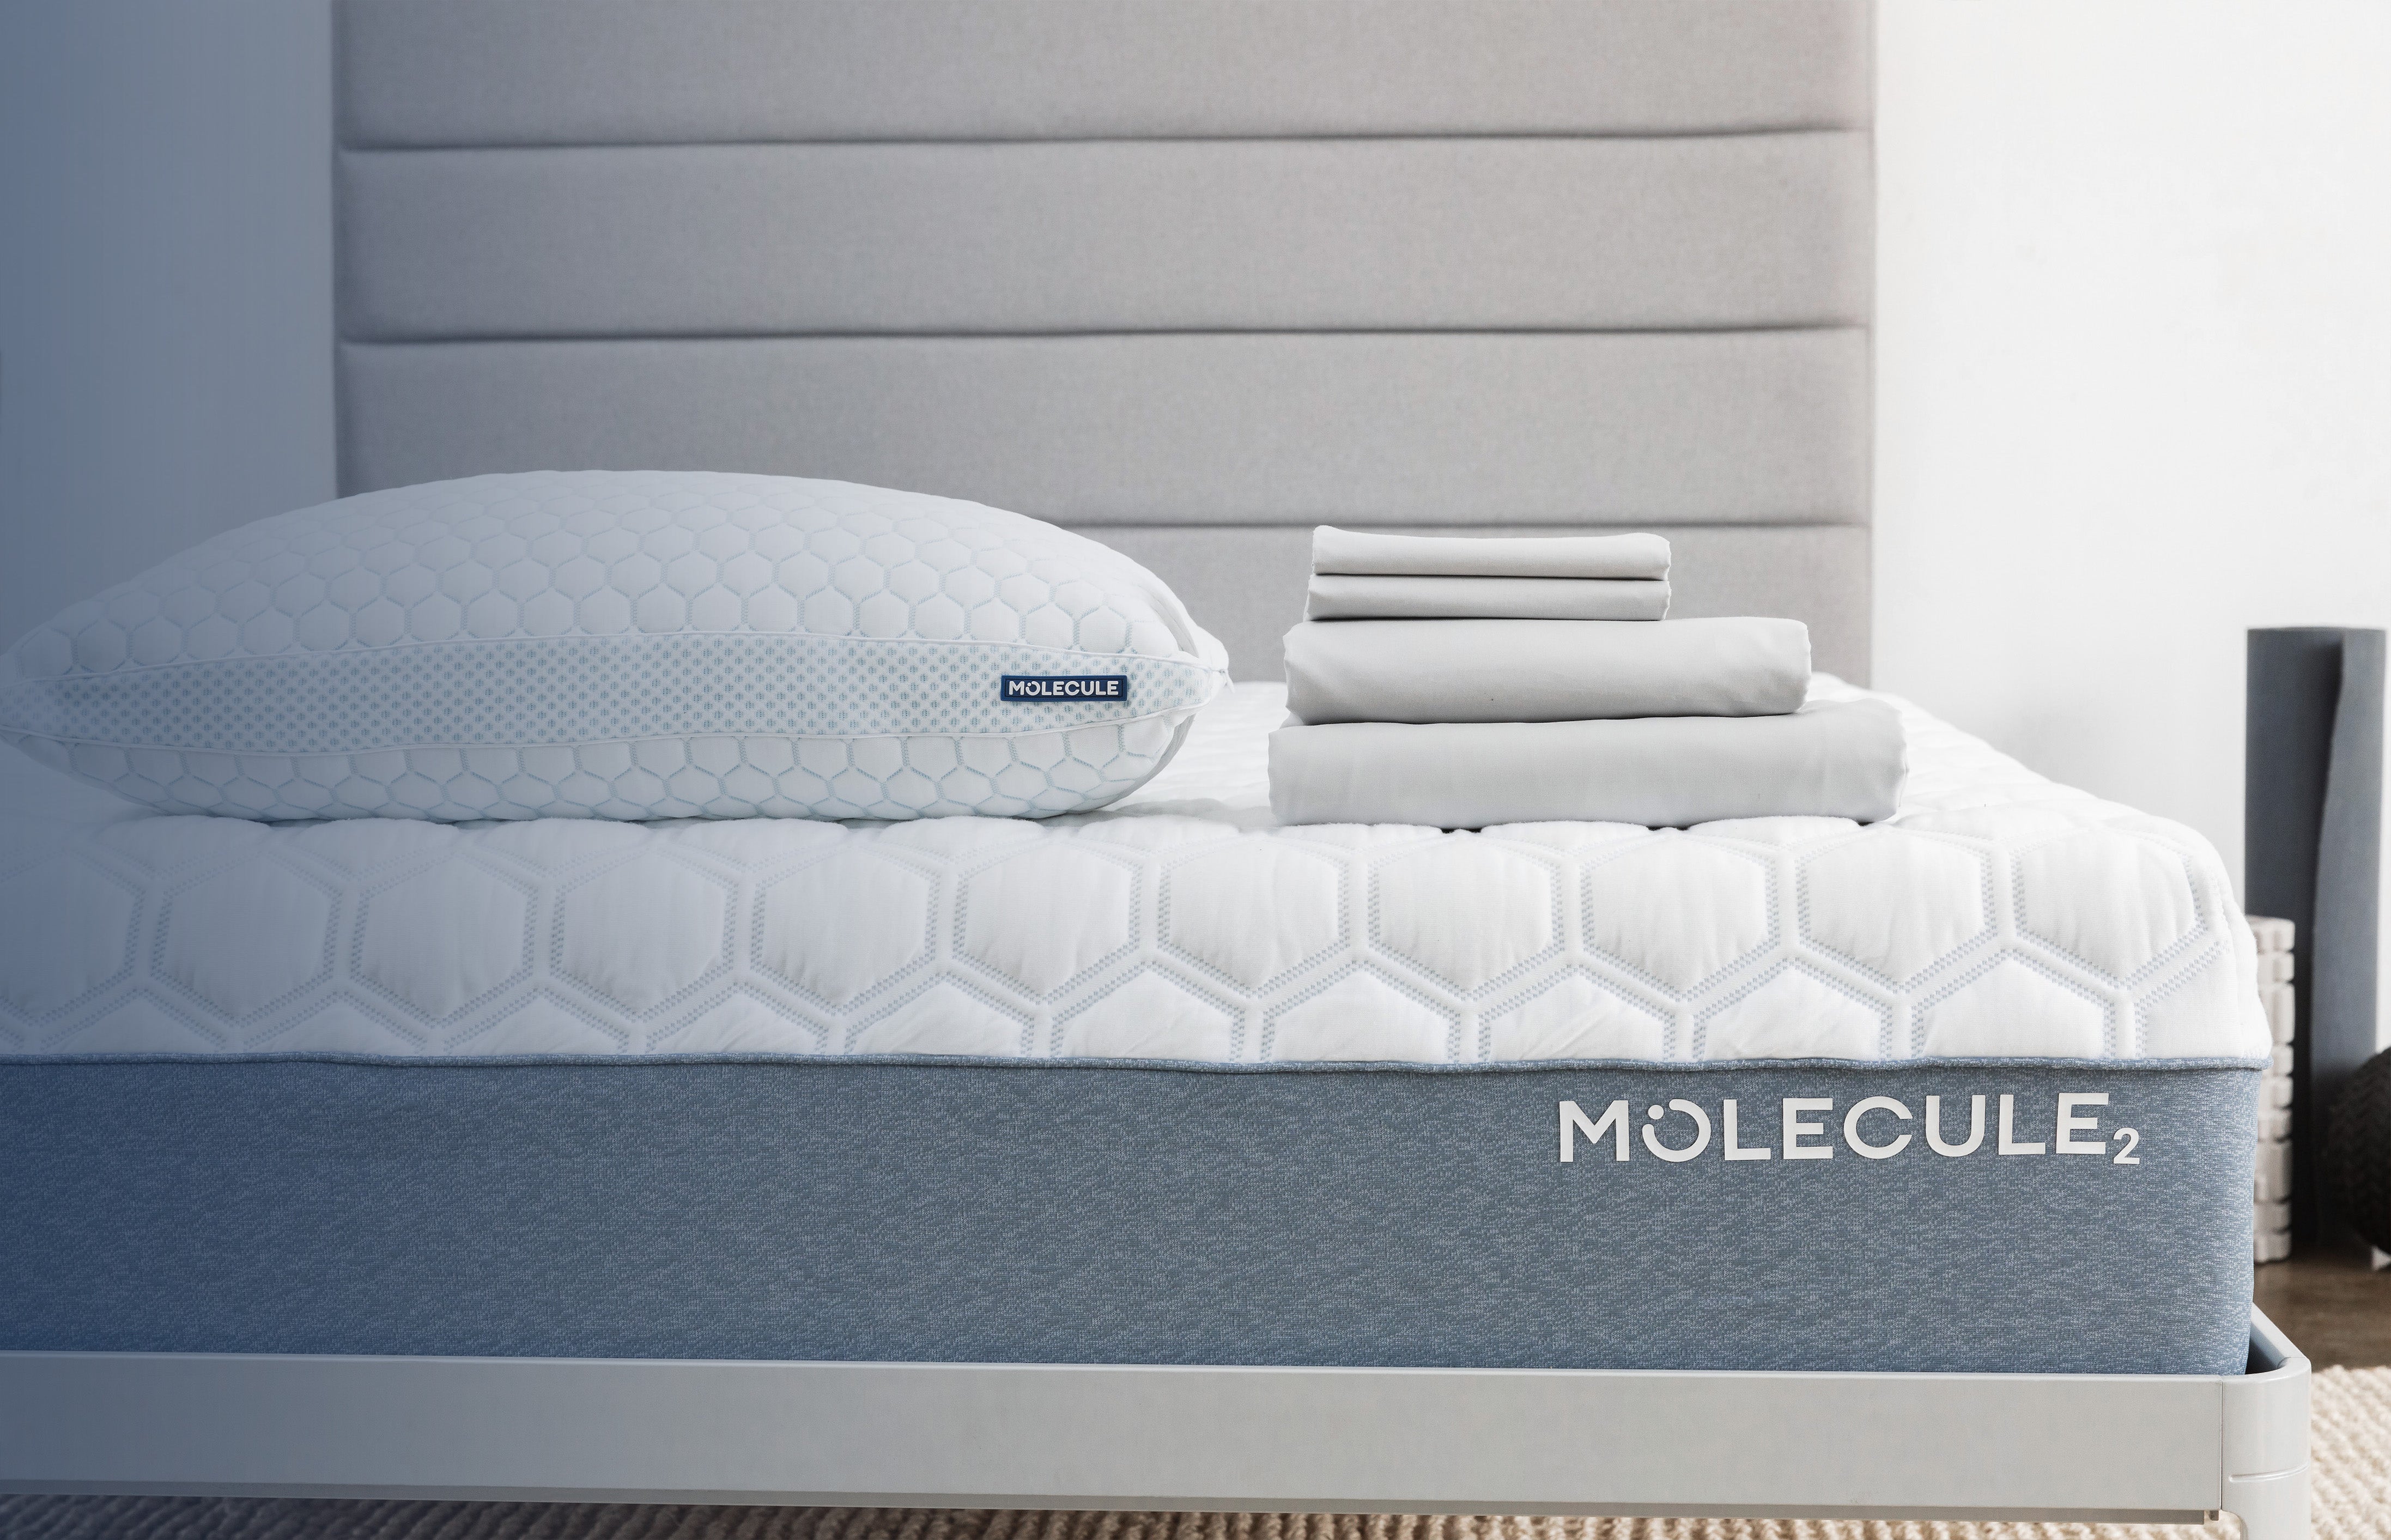 A Molecule Infinity Pro Adjustable Foam Pillow and sheet set resting on a Molecule 2 Airtec Mattress